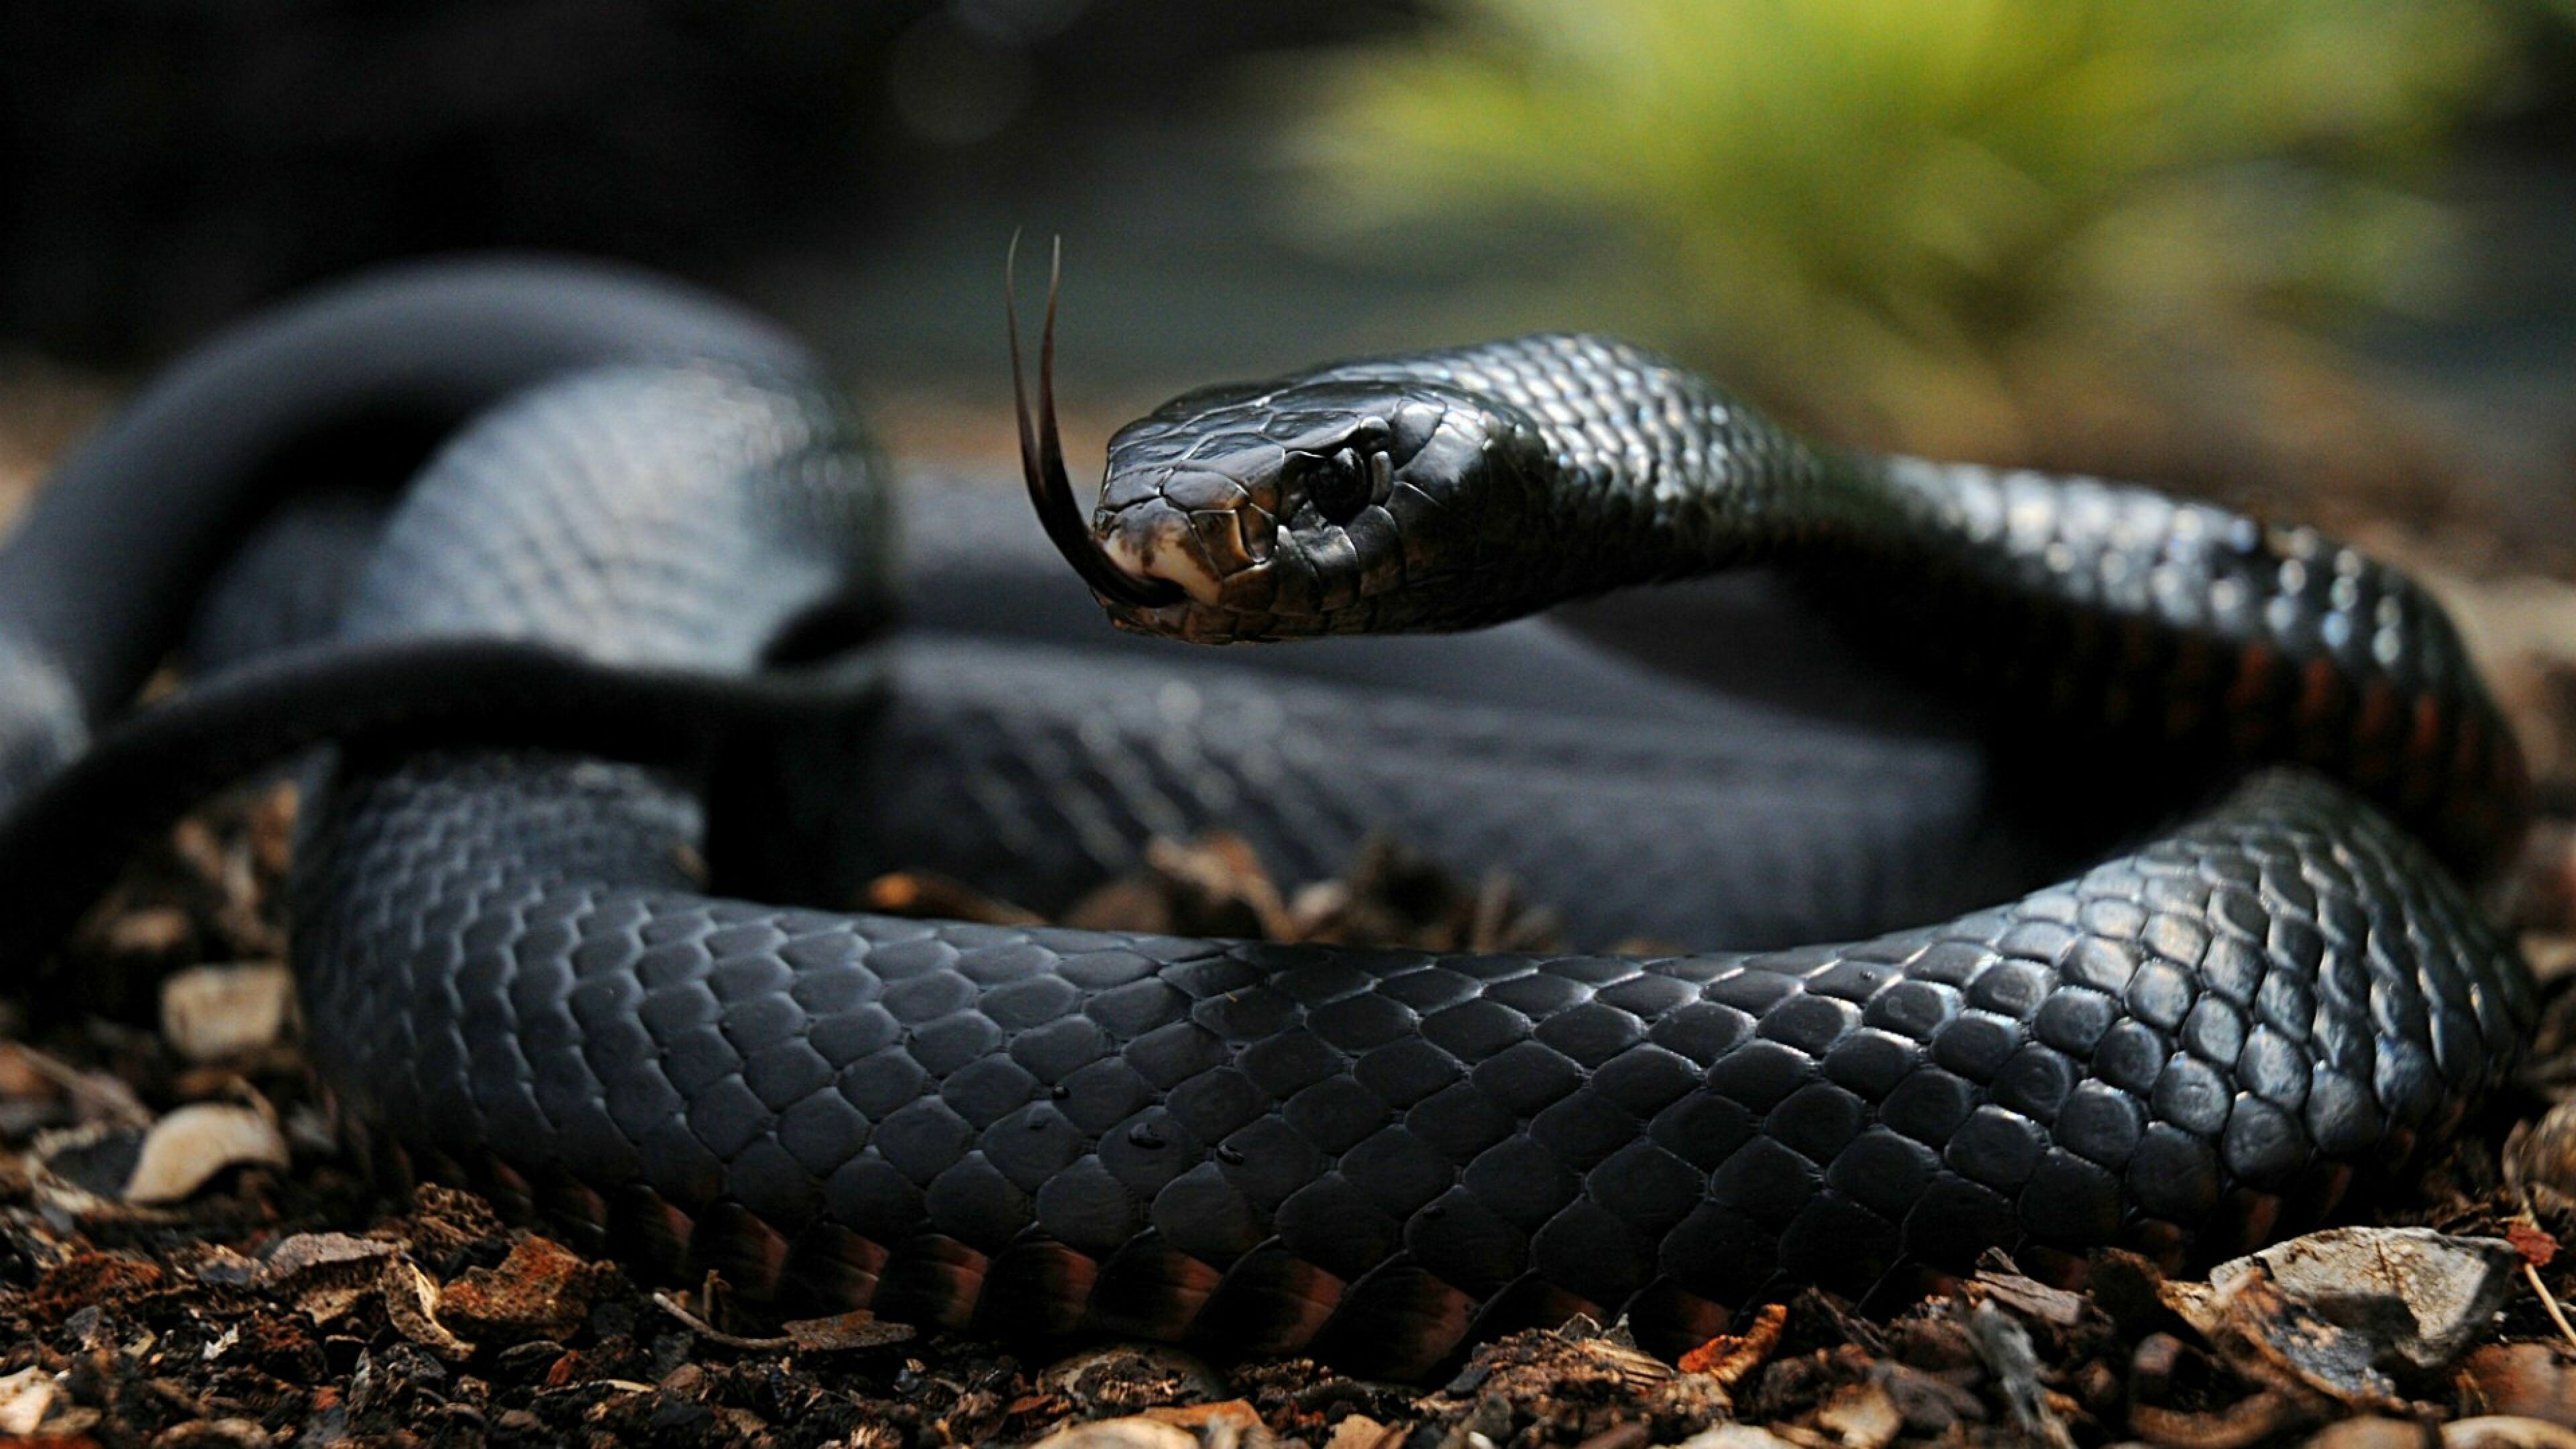 Snake: Elongated, limbless, carnivorous reptiles of the suborder Serpentes. 3840x2160 4K Wallpaper.